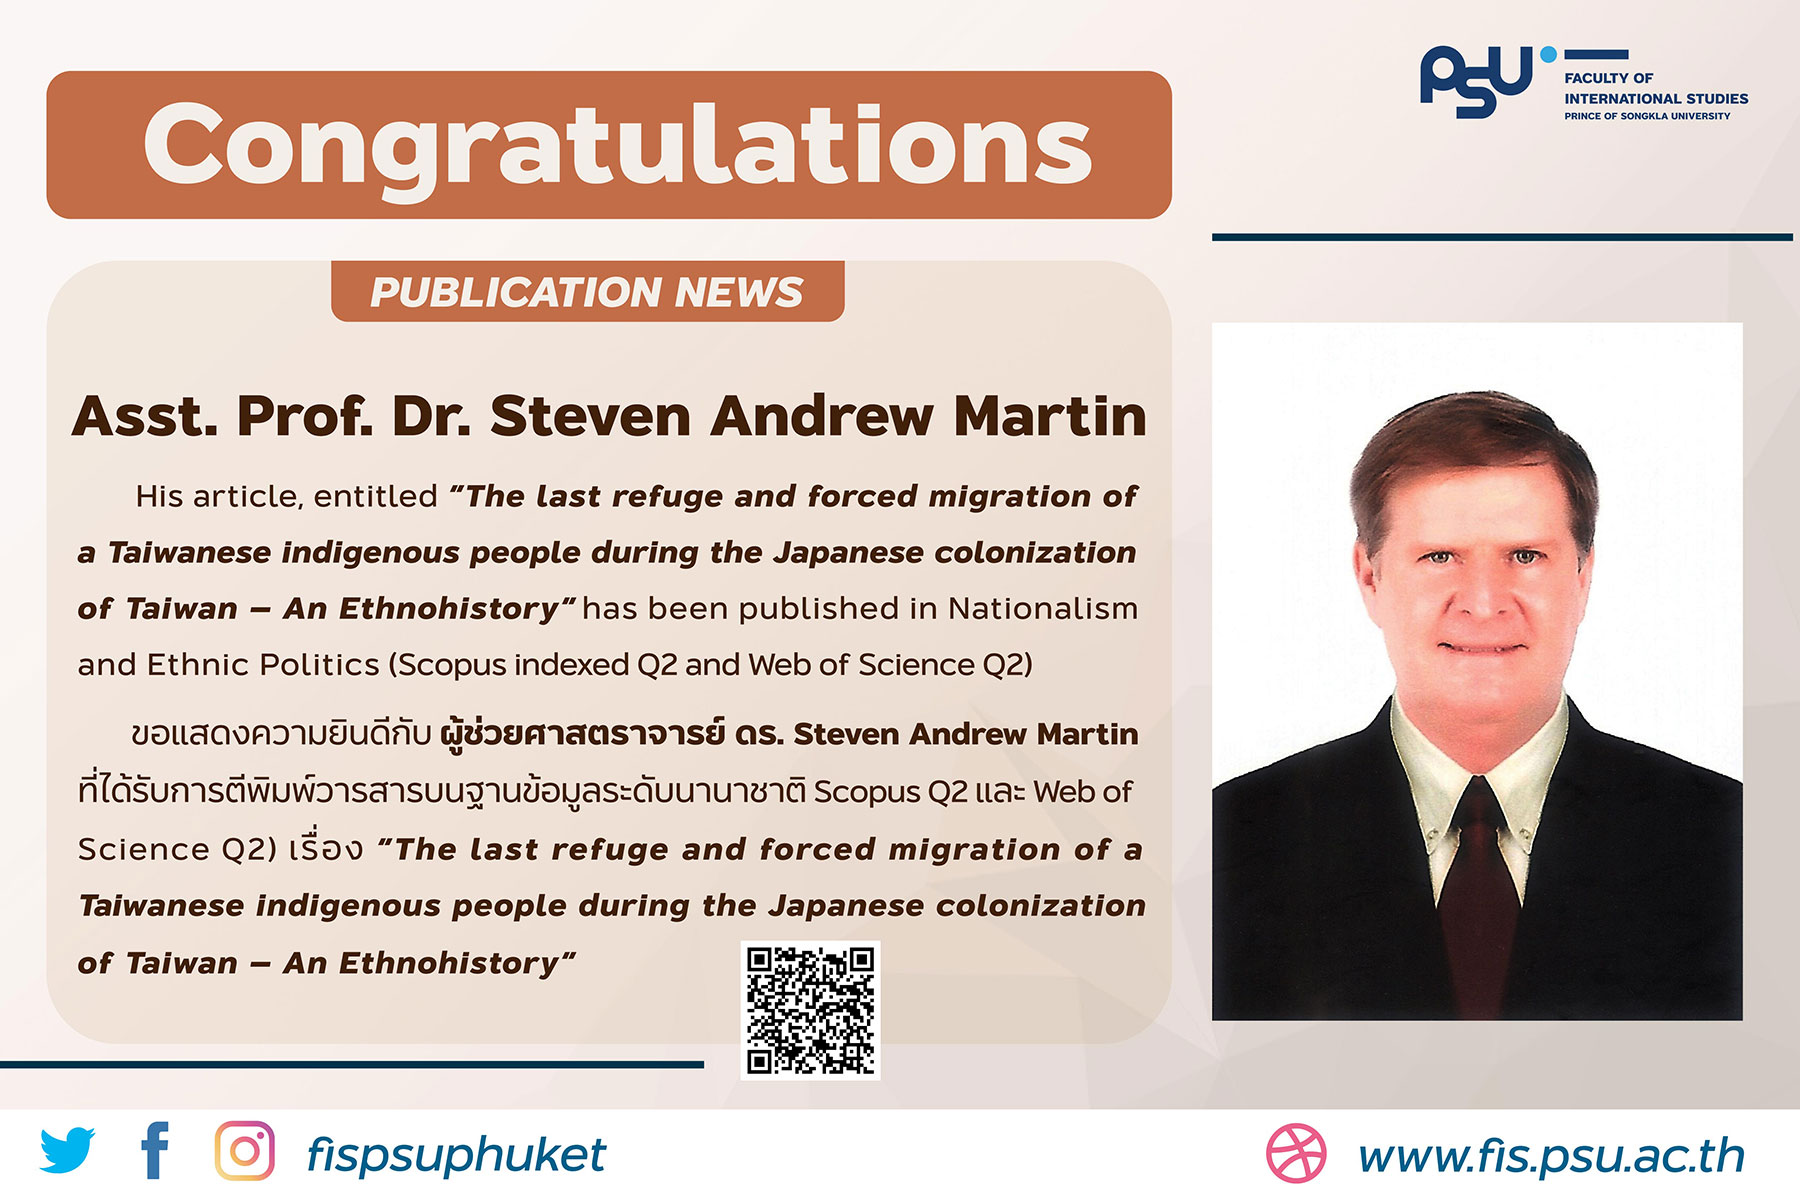 Faculty of International Studies | Asst Professor Dr Steven Andrew Martin | Congratulations Publication News | Taiwan Studies | Journal of Nationalism & Ethnic Politics | Bunun Indigenous